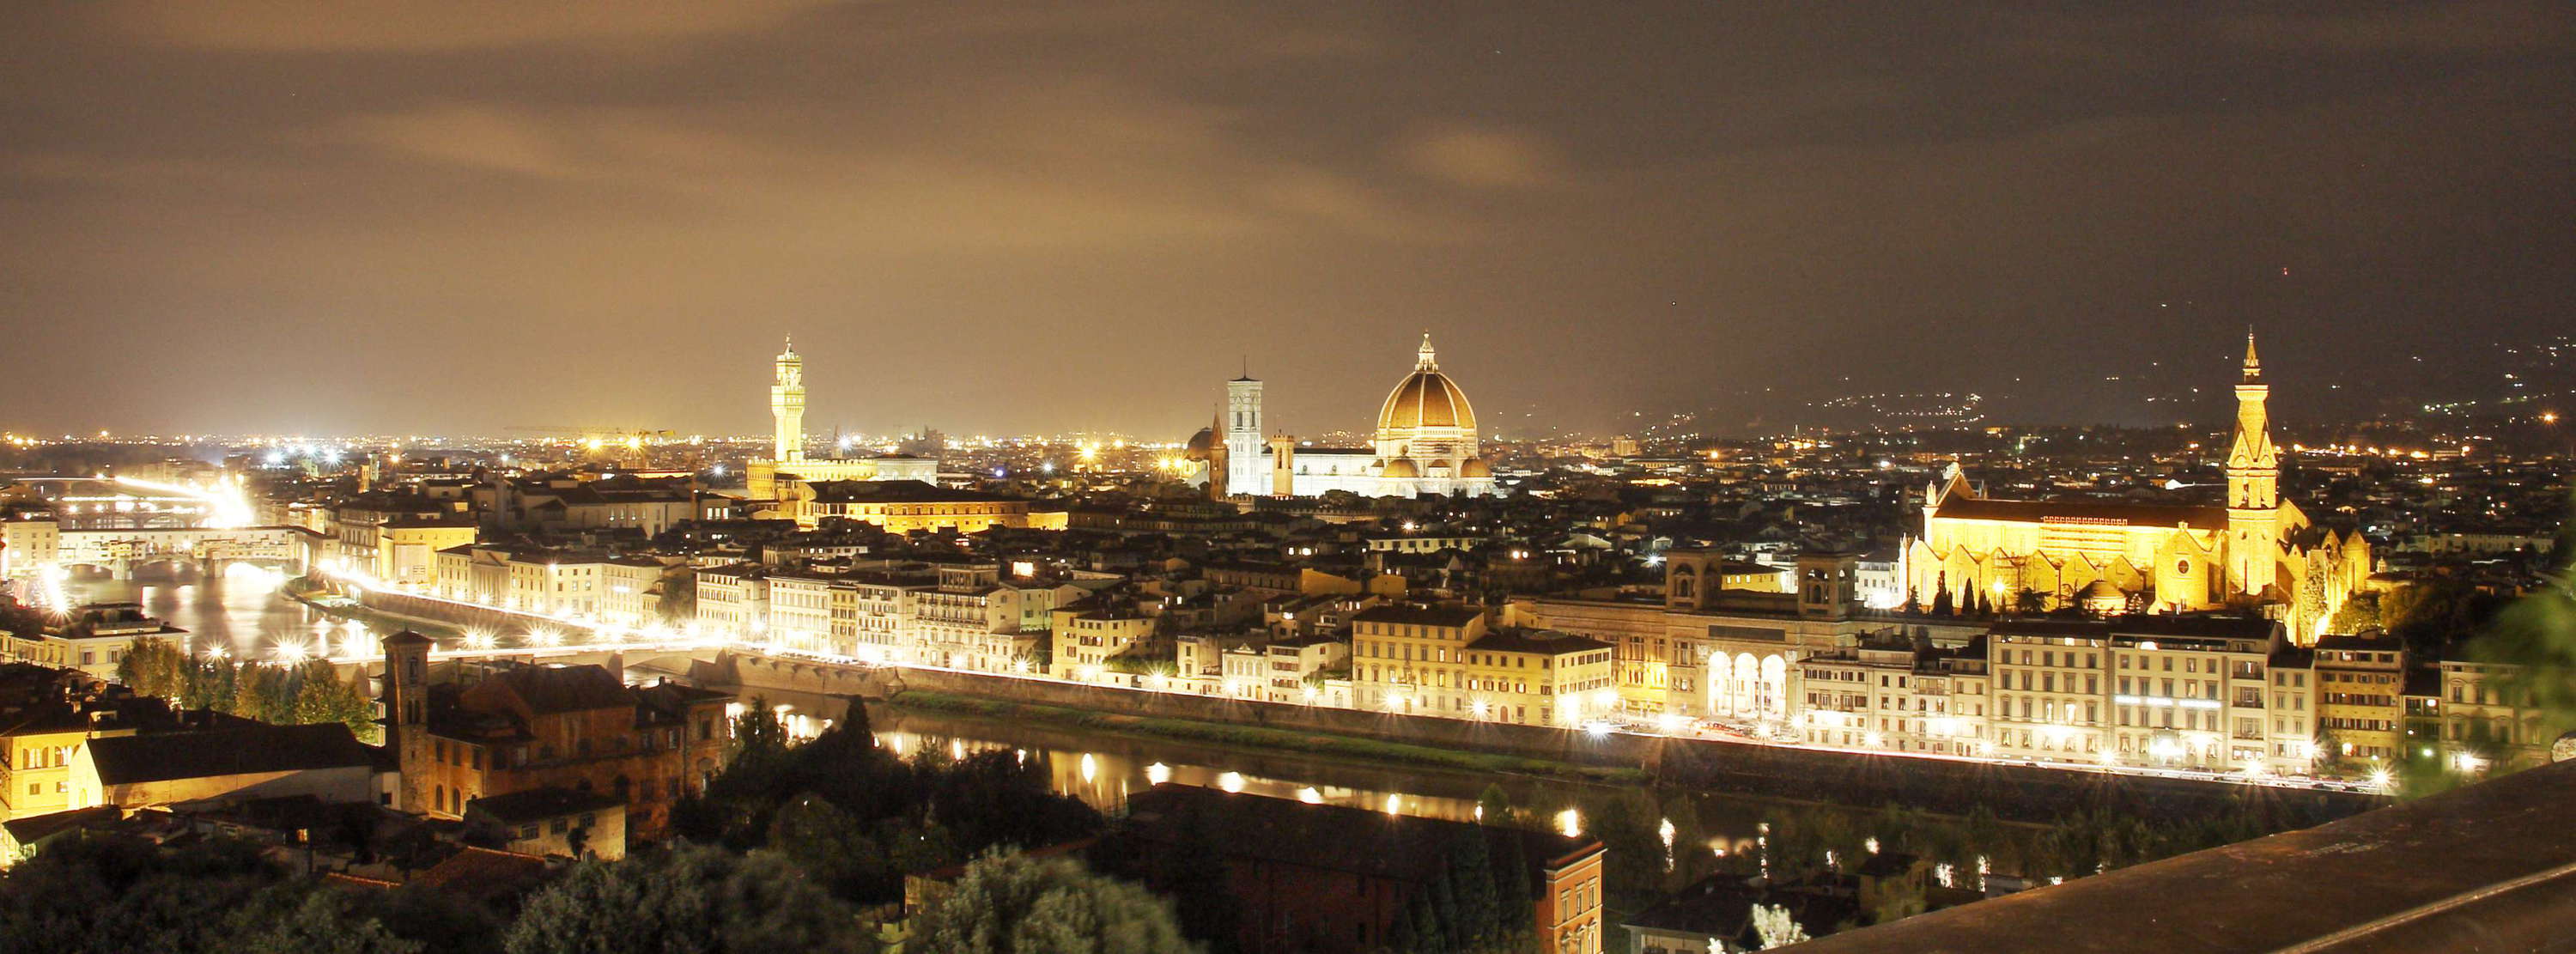 Firenze | Nighttime panorama